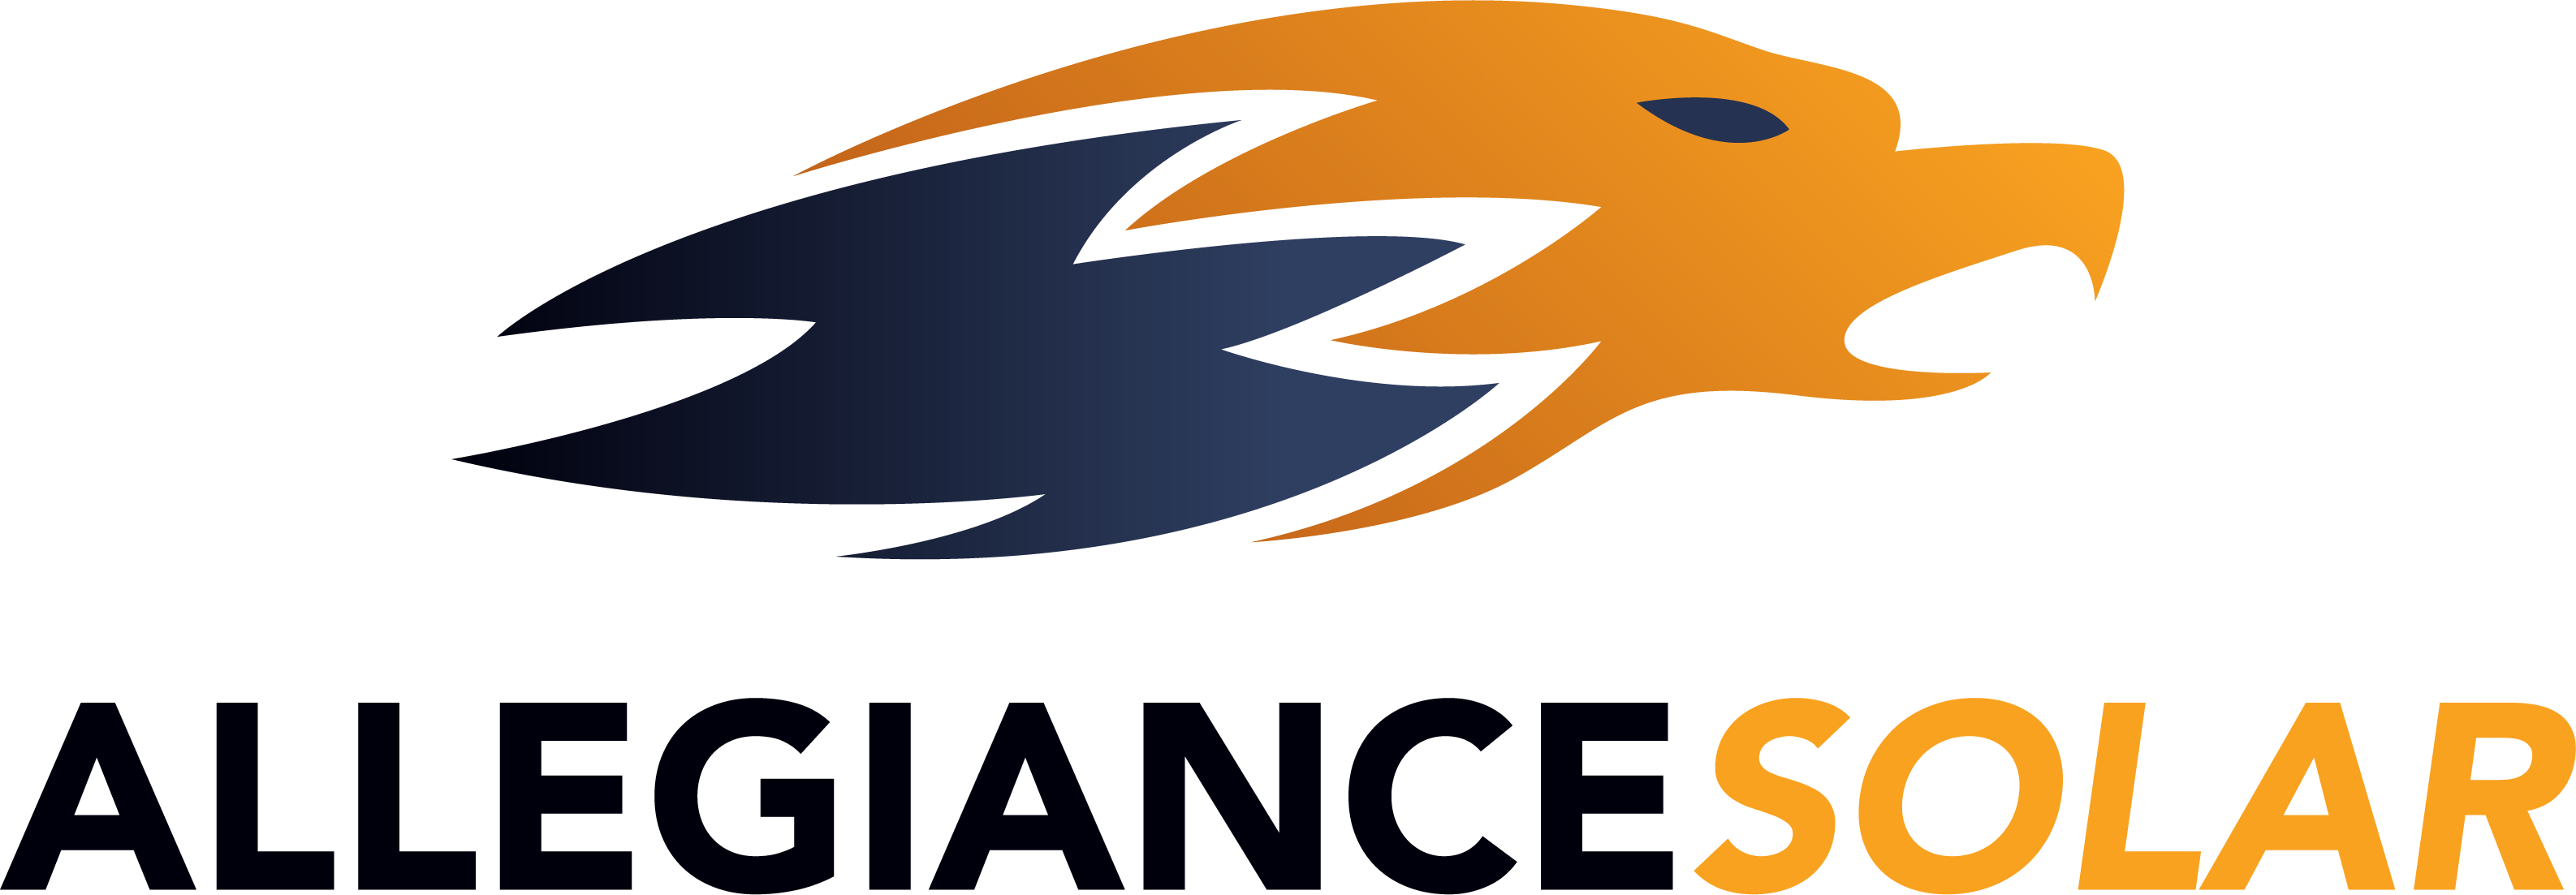 Allegiance Solar LLC logo